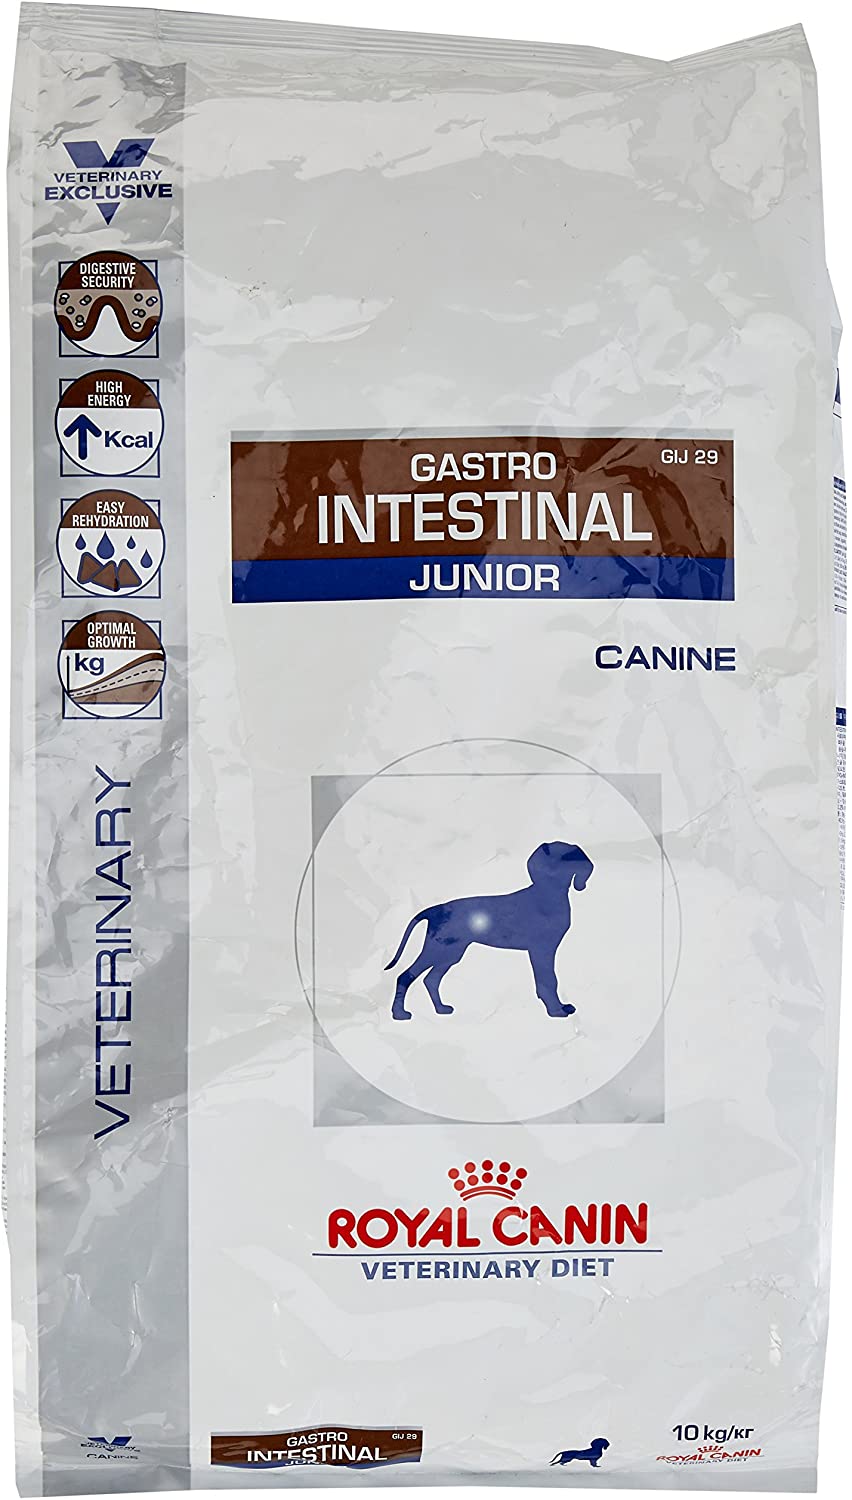  Royal Canin C-11210 Gastro Intestinal Junior Gi29 - 10 Kg 